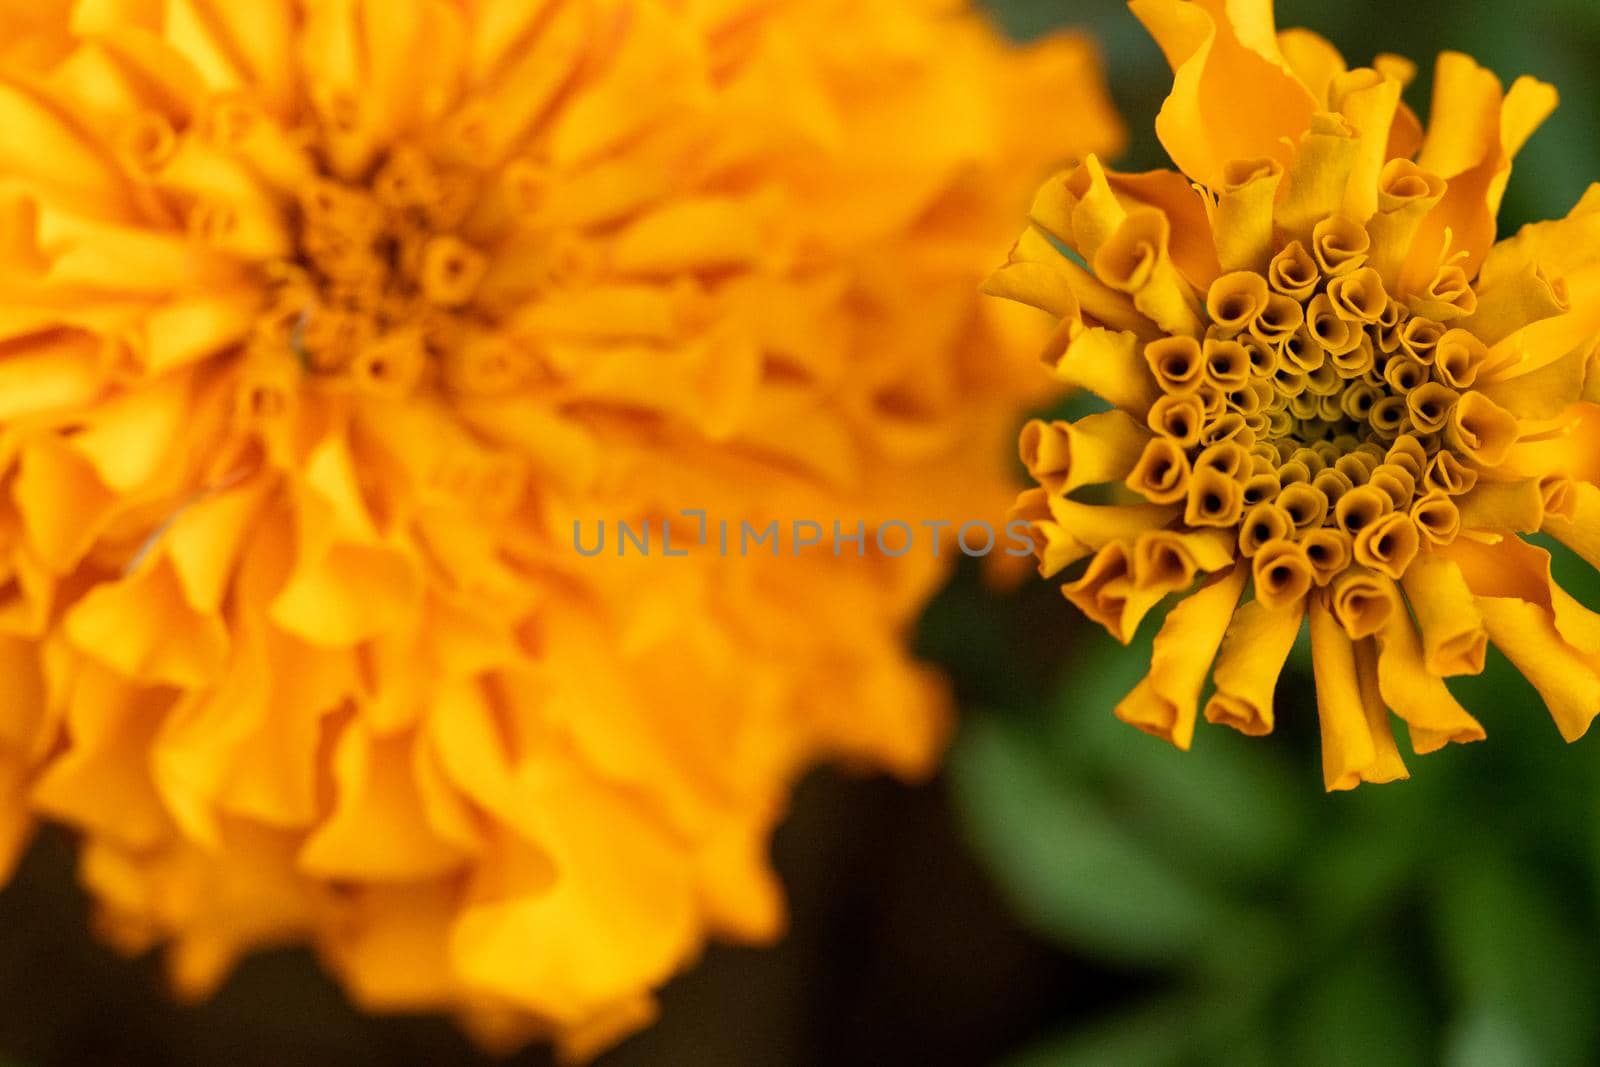 Bright Orange Chrysanthemums Blooming in the summer time by gena_wells